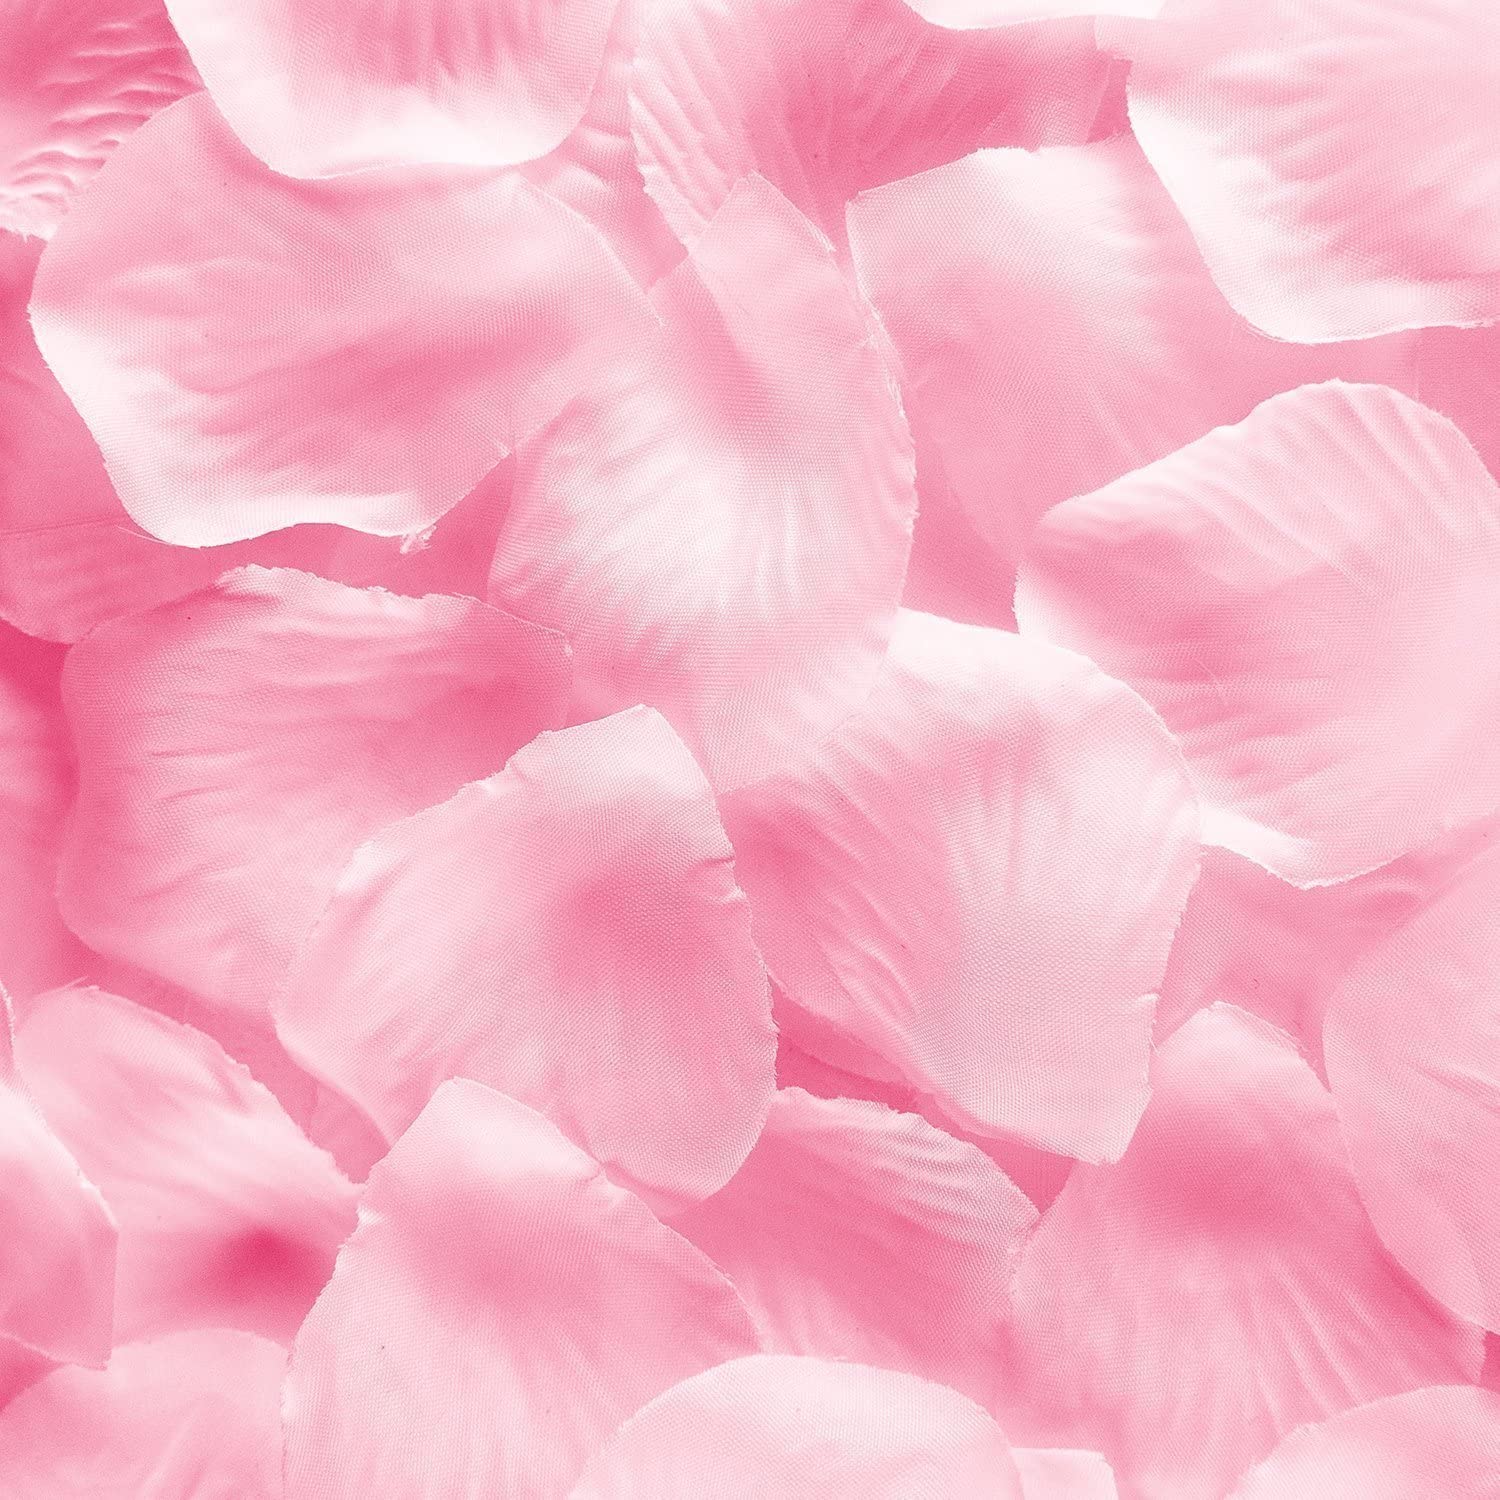 Pink Petals - Best Party Supplies Store in Nigeria